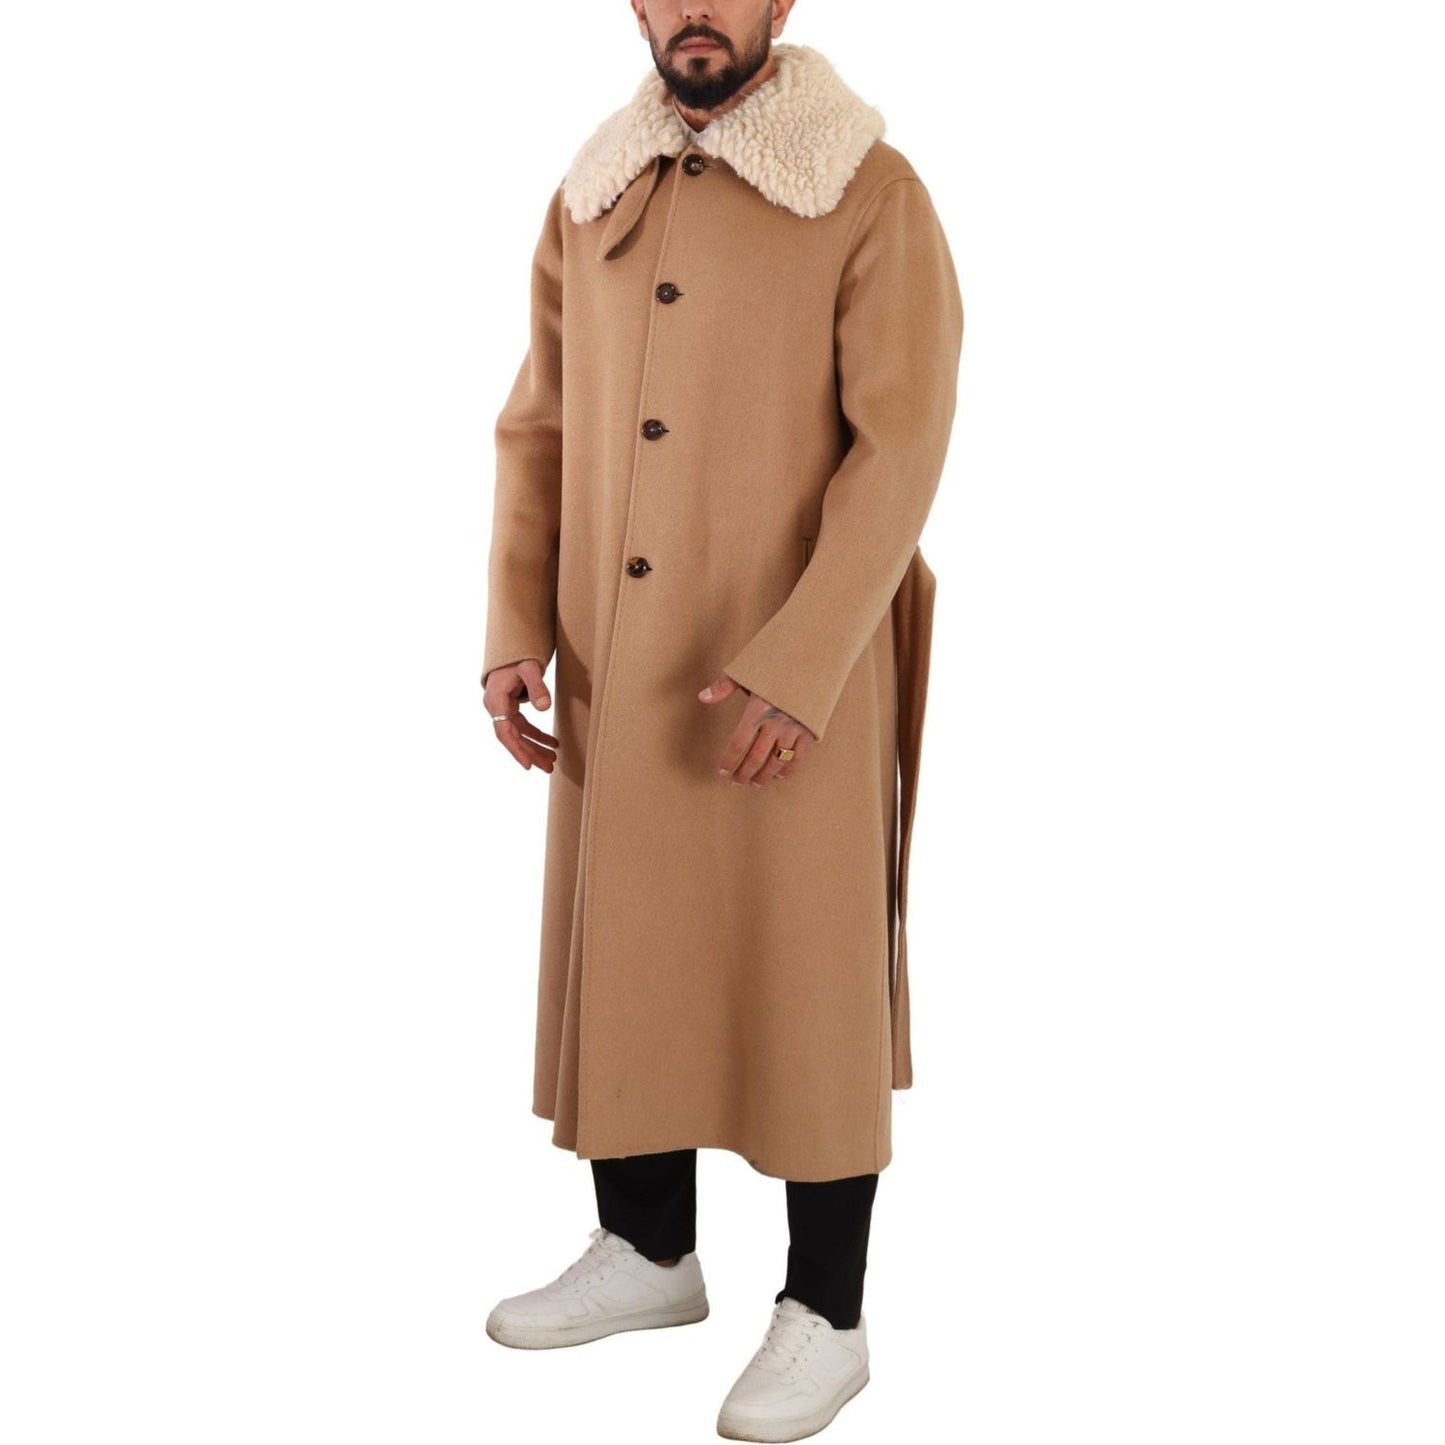 Dolce & Gabbana Opulent Beige Shearling-Collar Overcoat beige-camel-skin-cashmere-shearling-overcoat-jacket IMG_5029-scaled-caede233-418.jpg